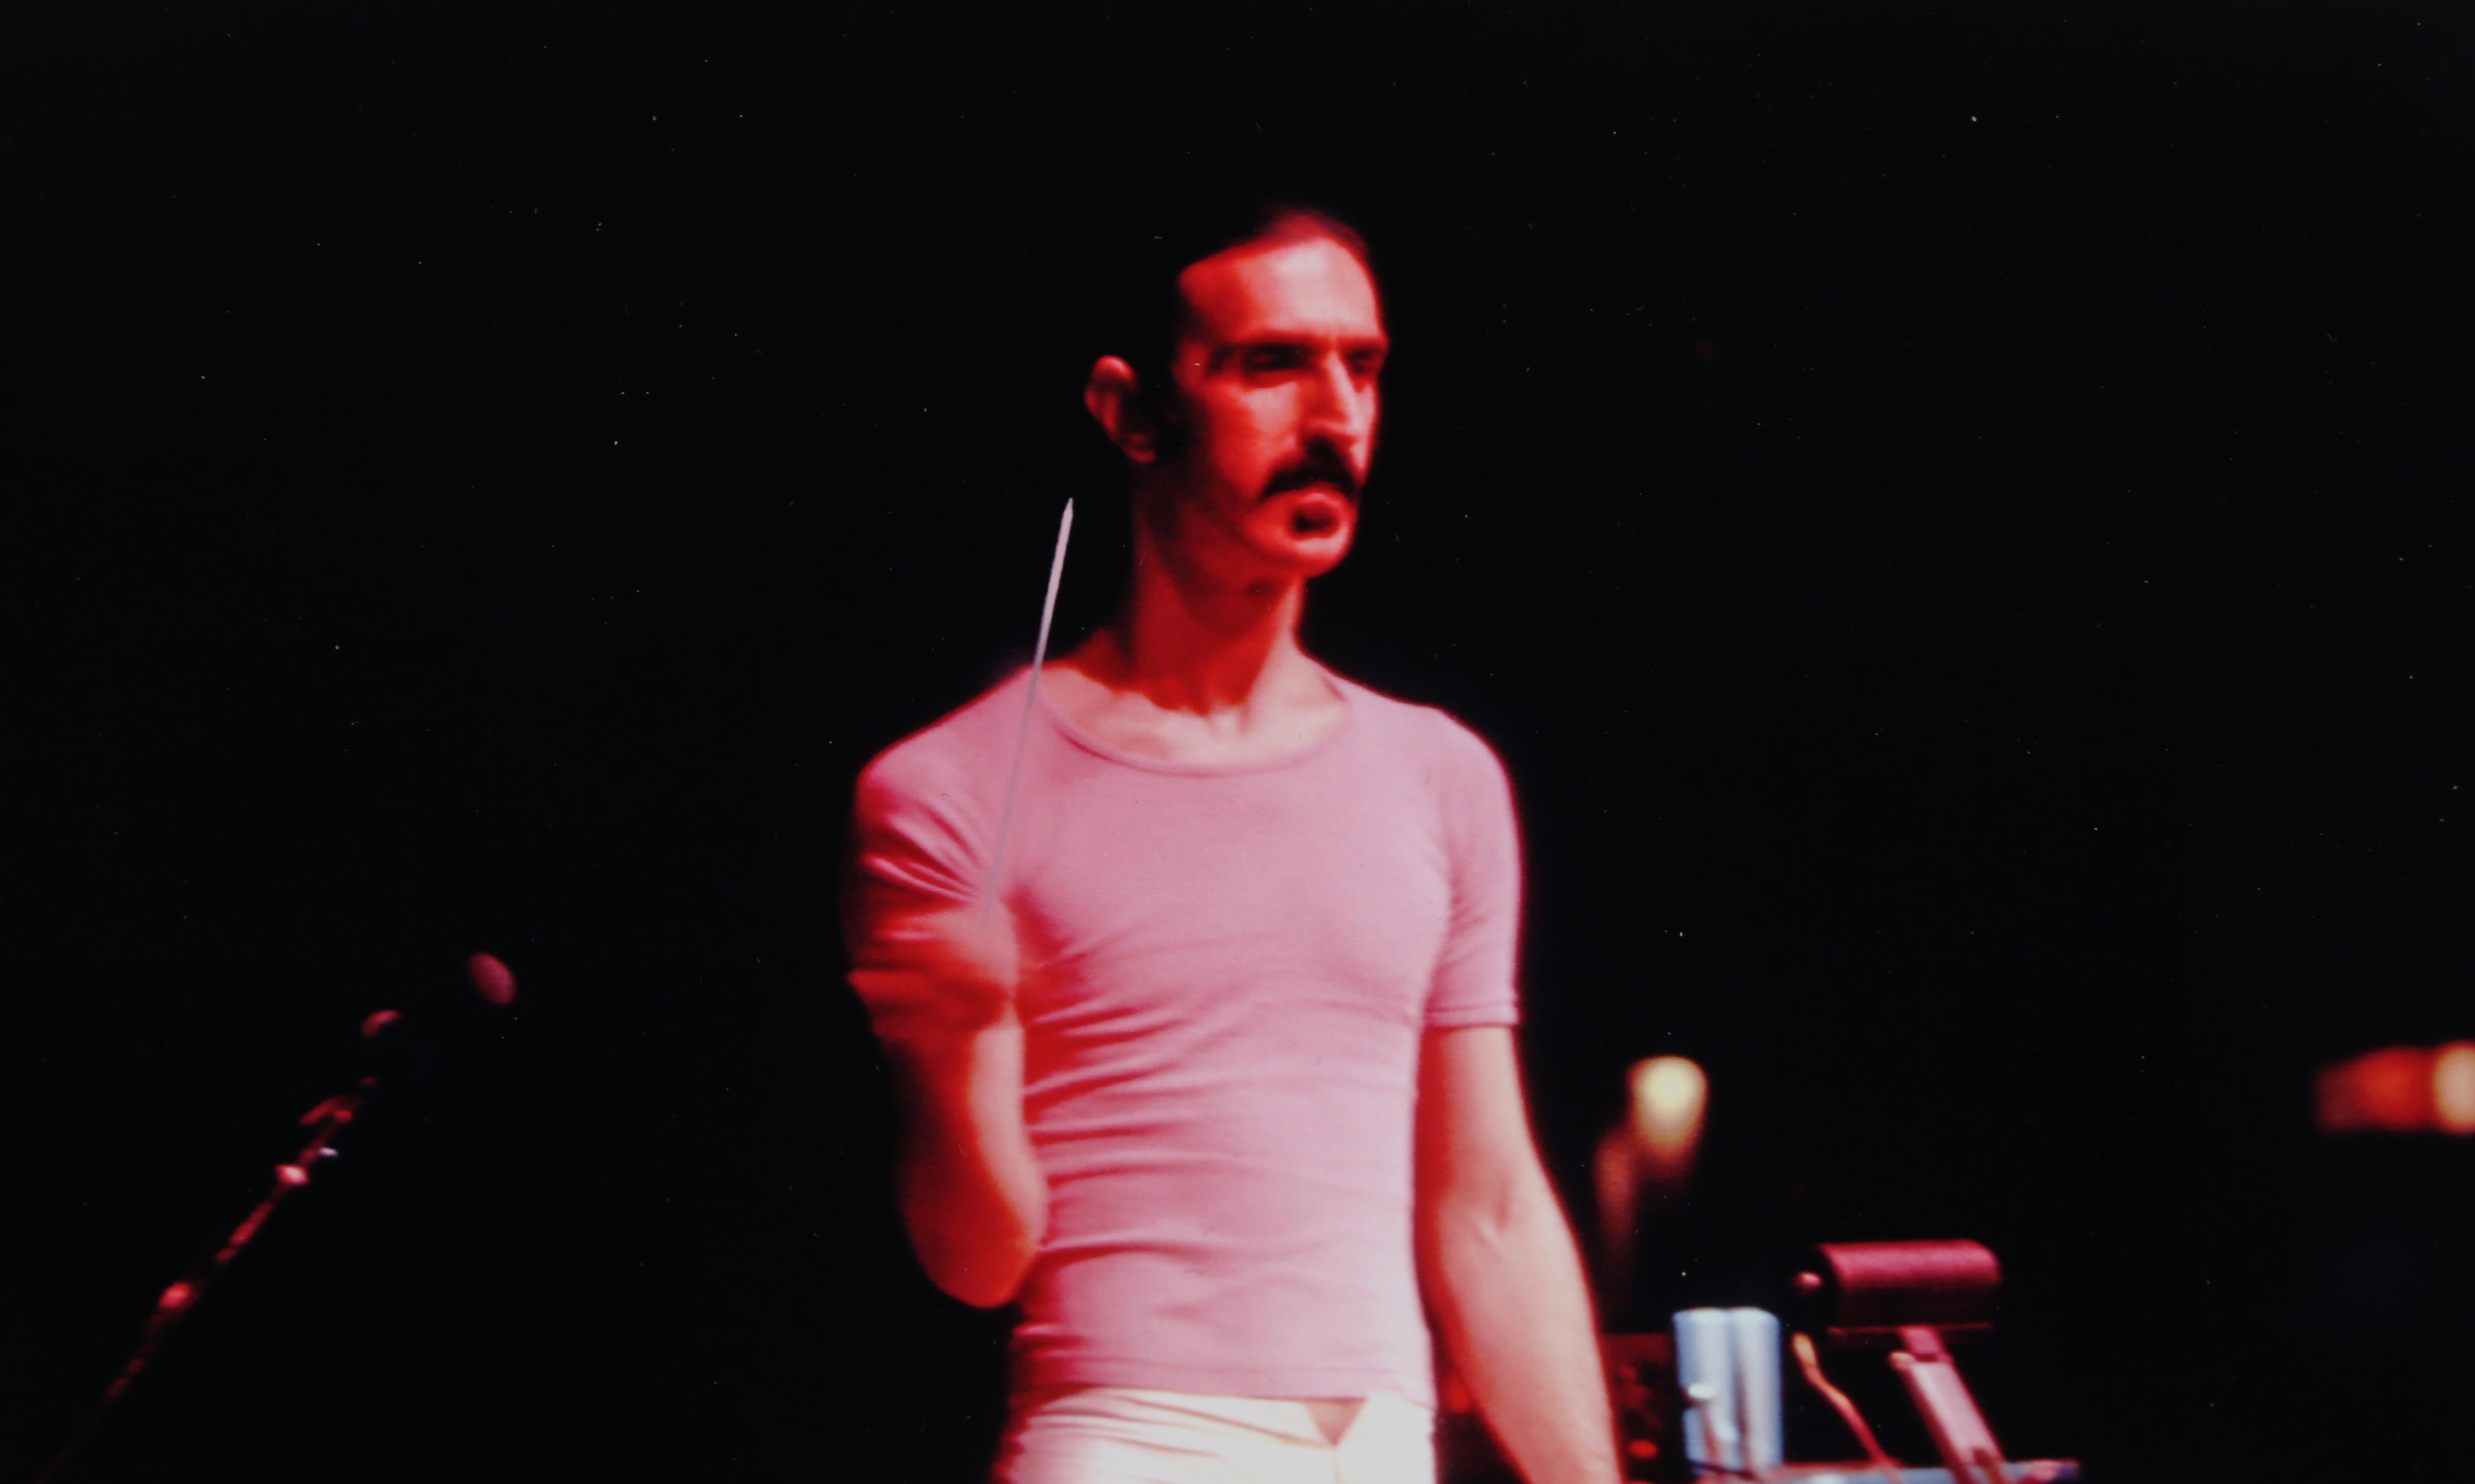 Frank Zappa Conducting - Black Portrait Photograph by Alan Herr